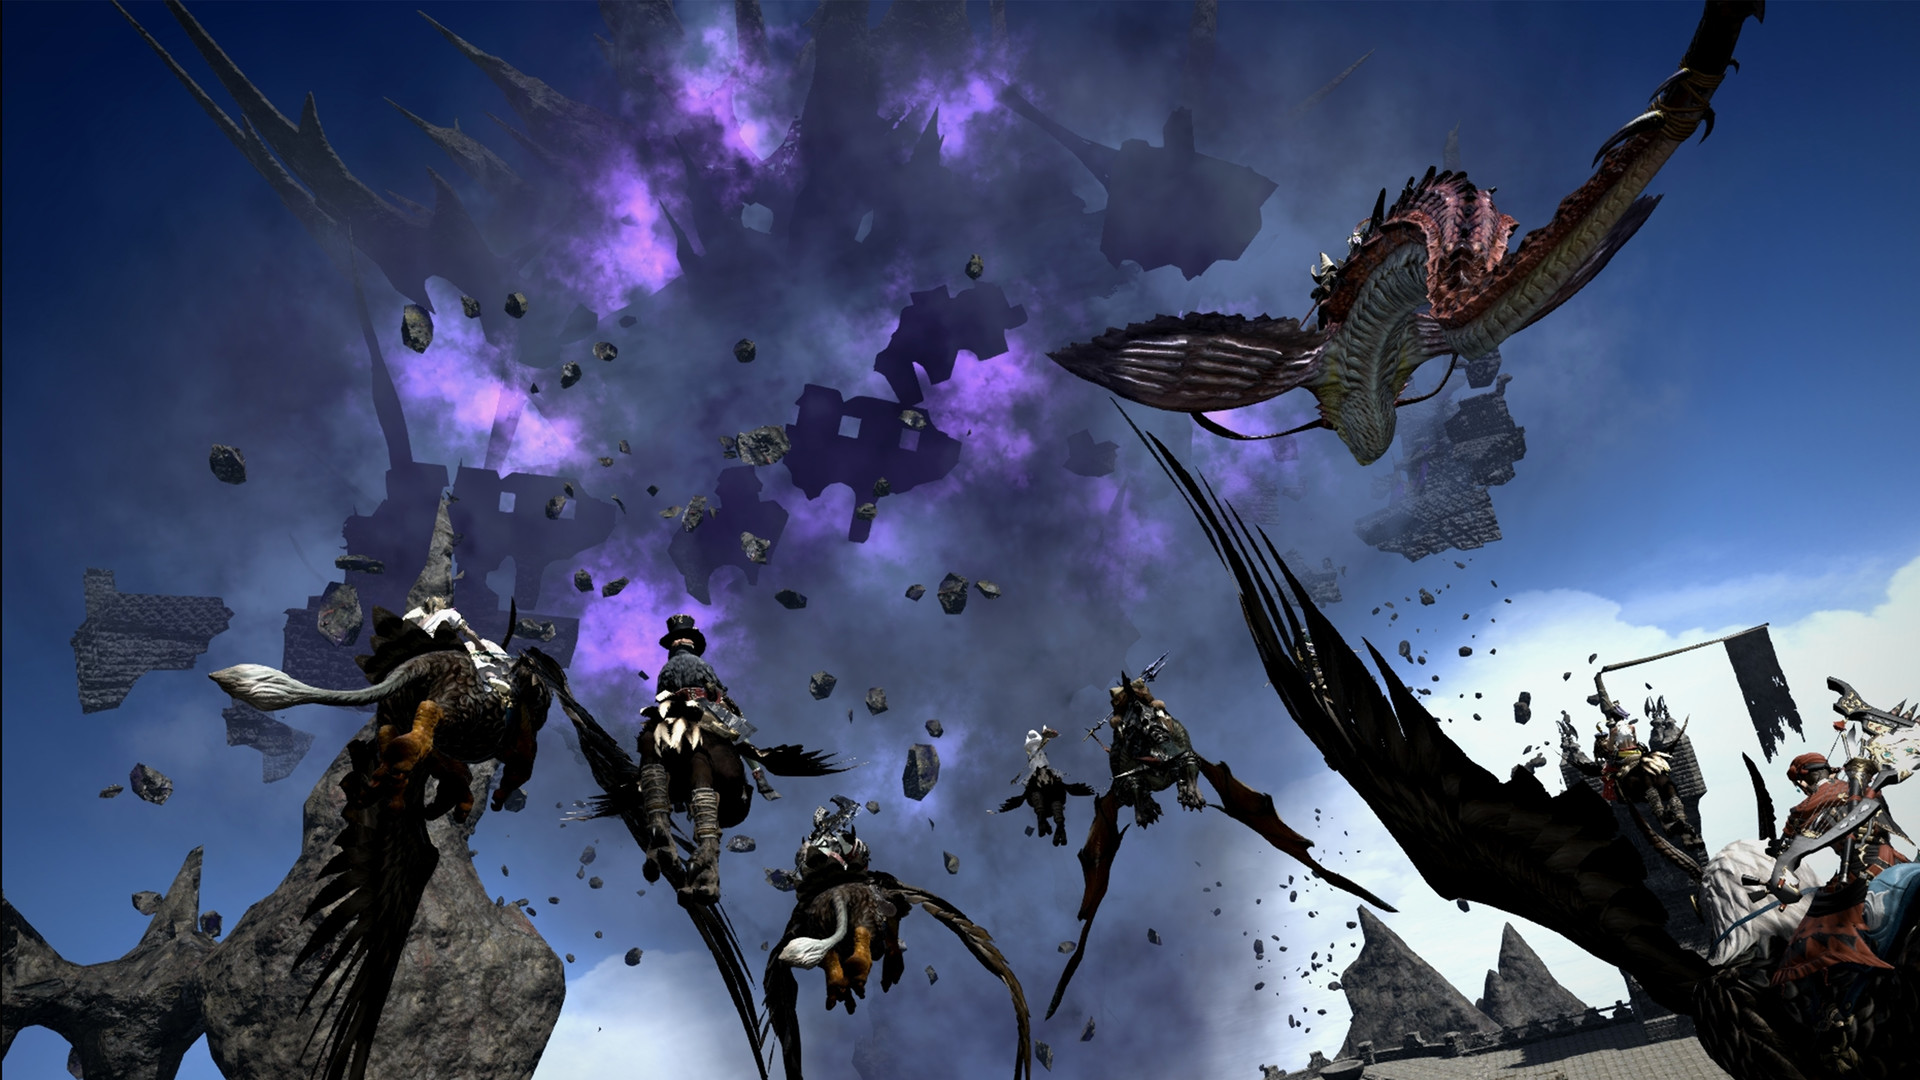 Final Fantasy Xiv Online Free Trial On Steam